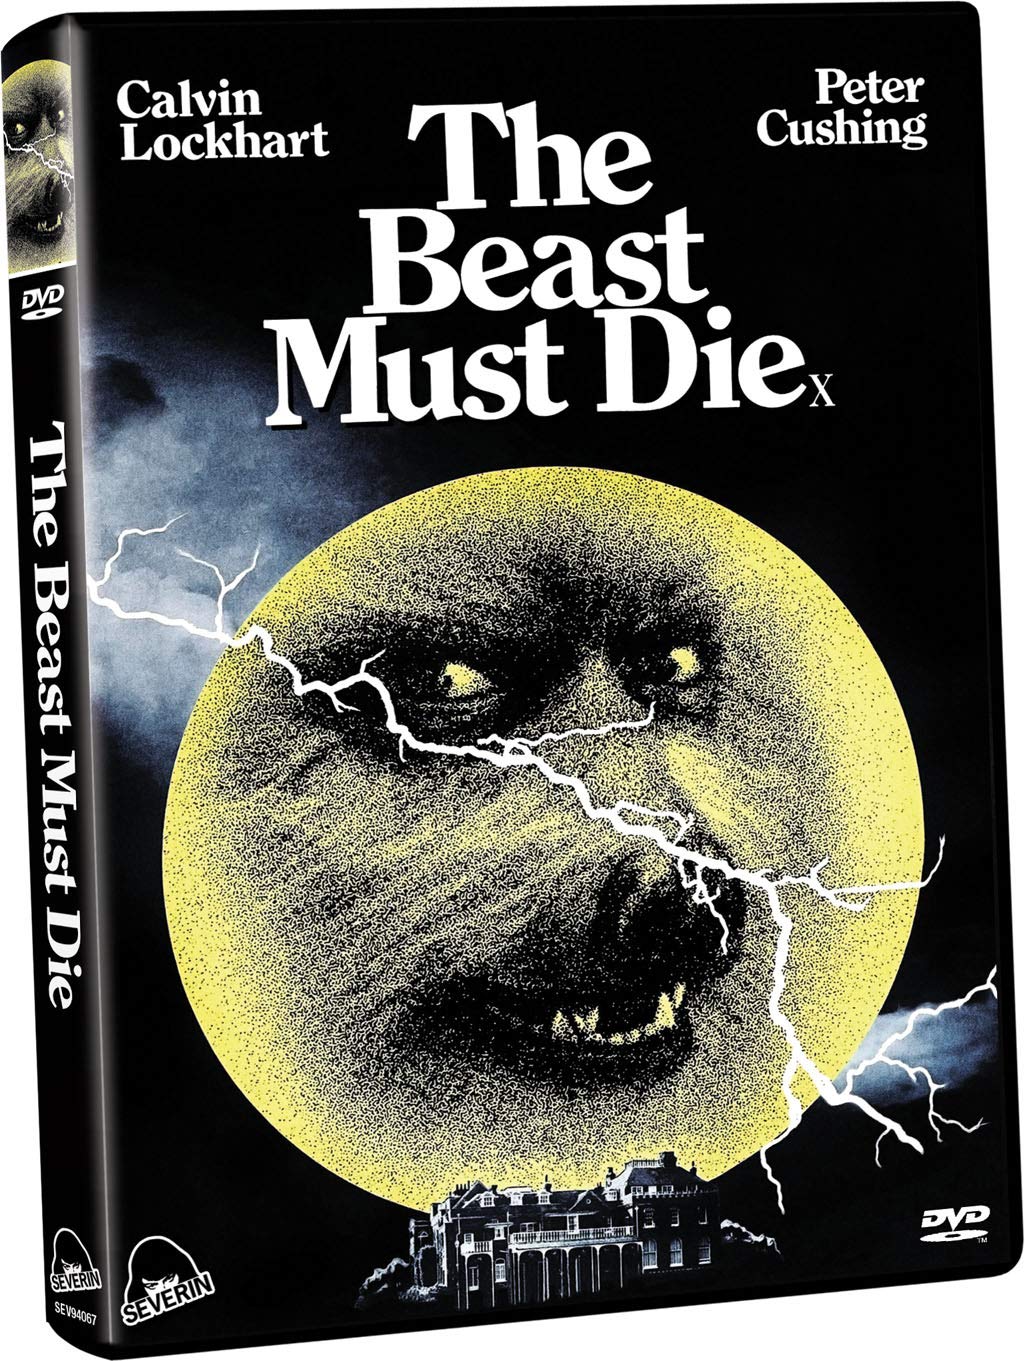 The Beast Must Die (1974) starring Calvin Lockhart, Peter Cushing